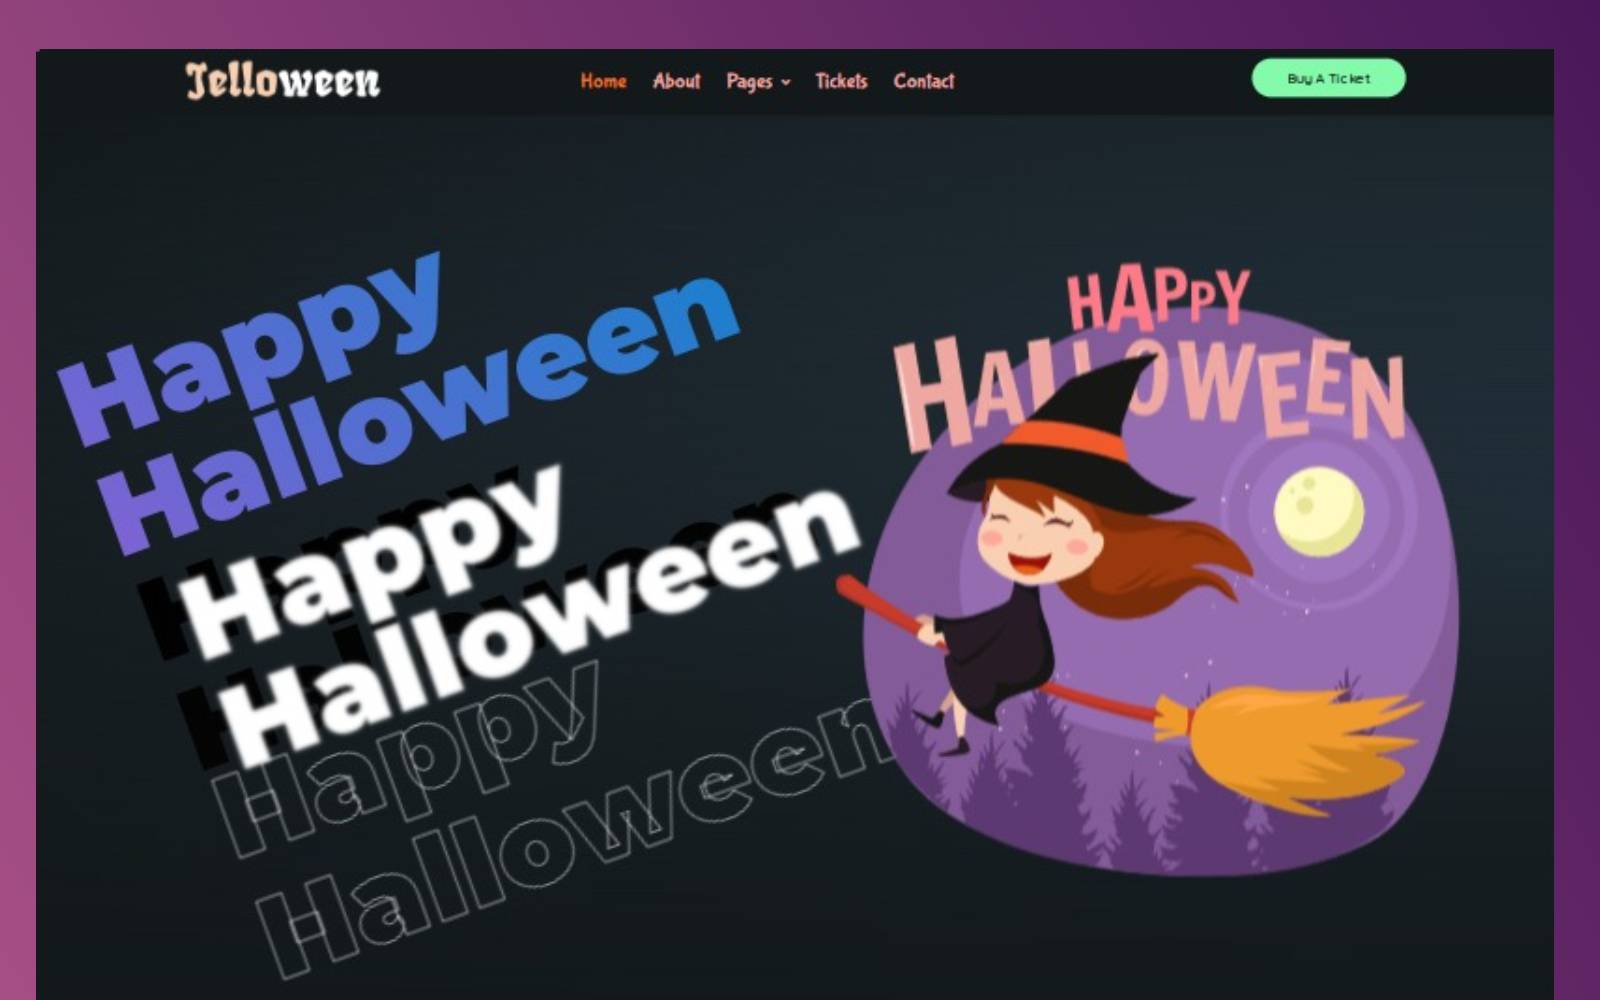 Jelloween - Halloween Party WordPress Theme